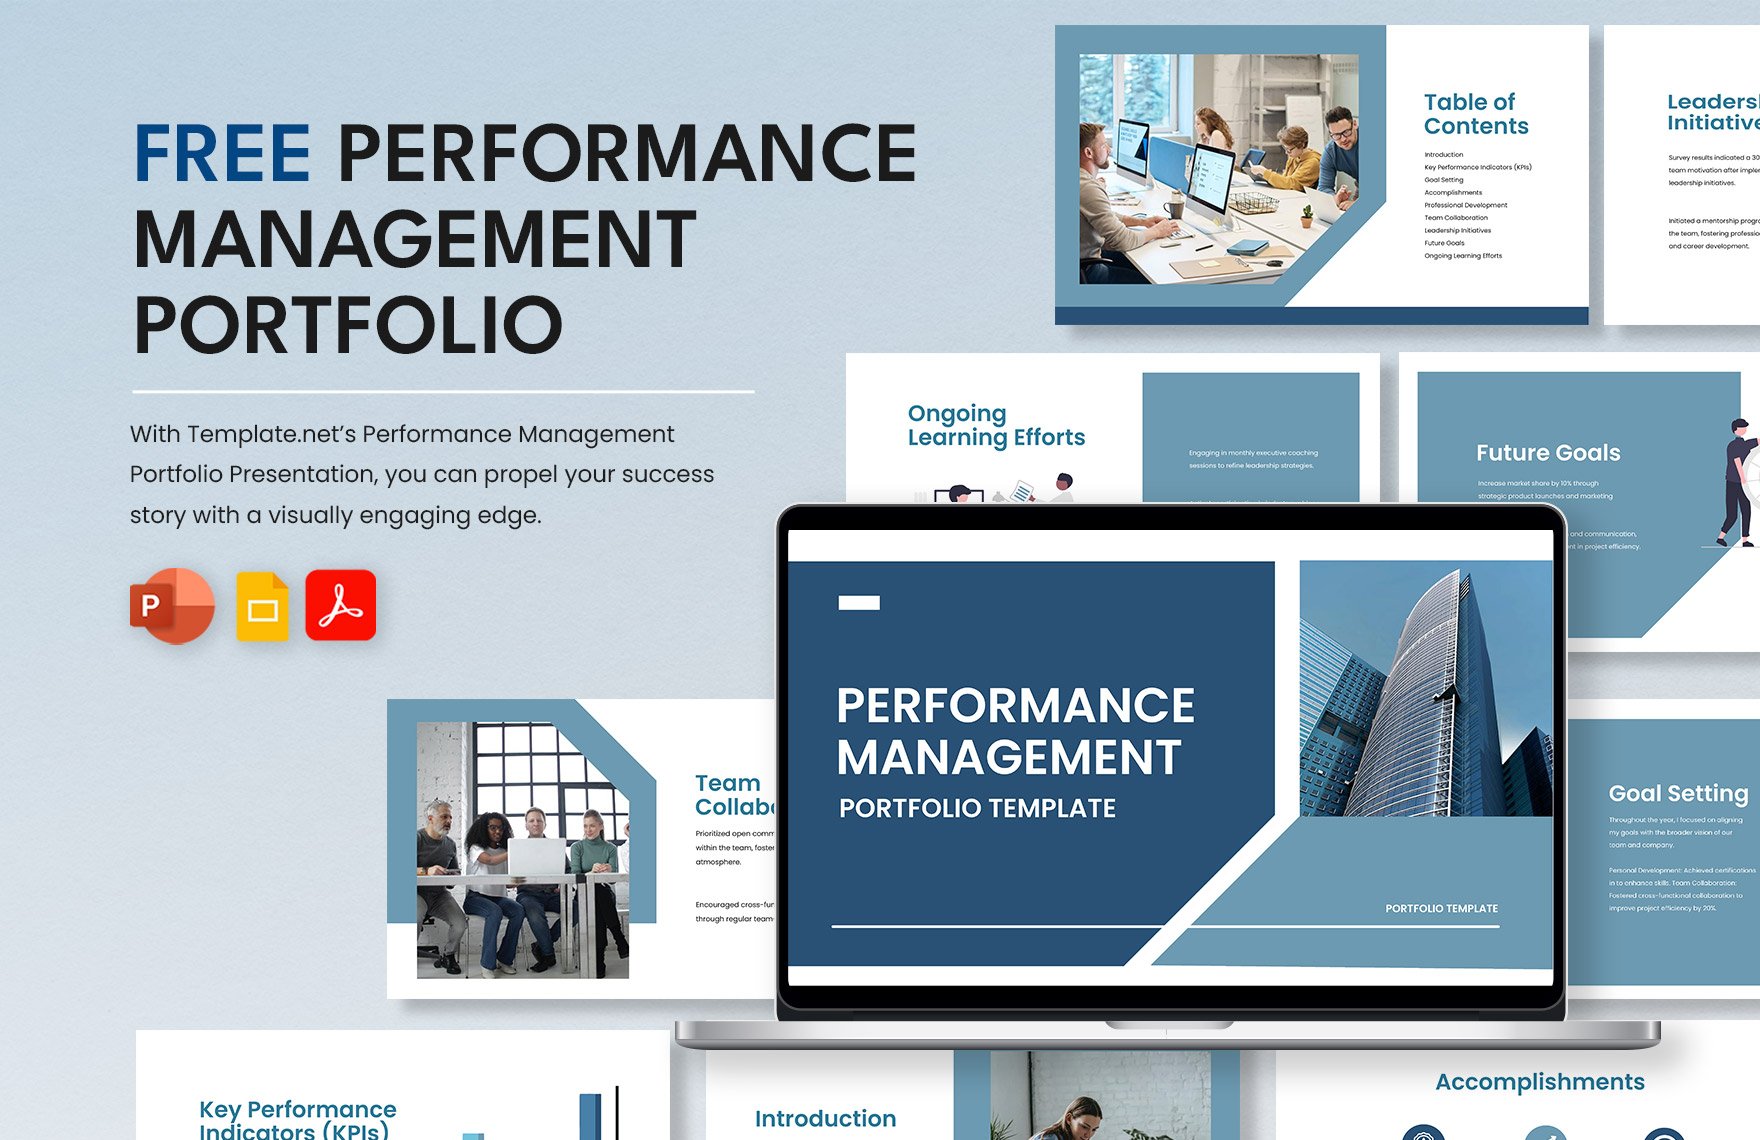 Performance Management Portfolio Template